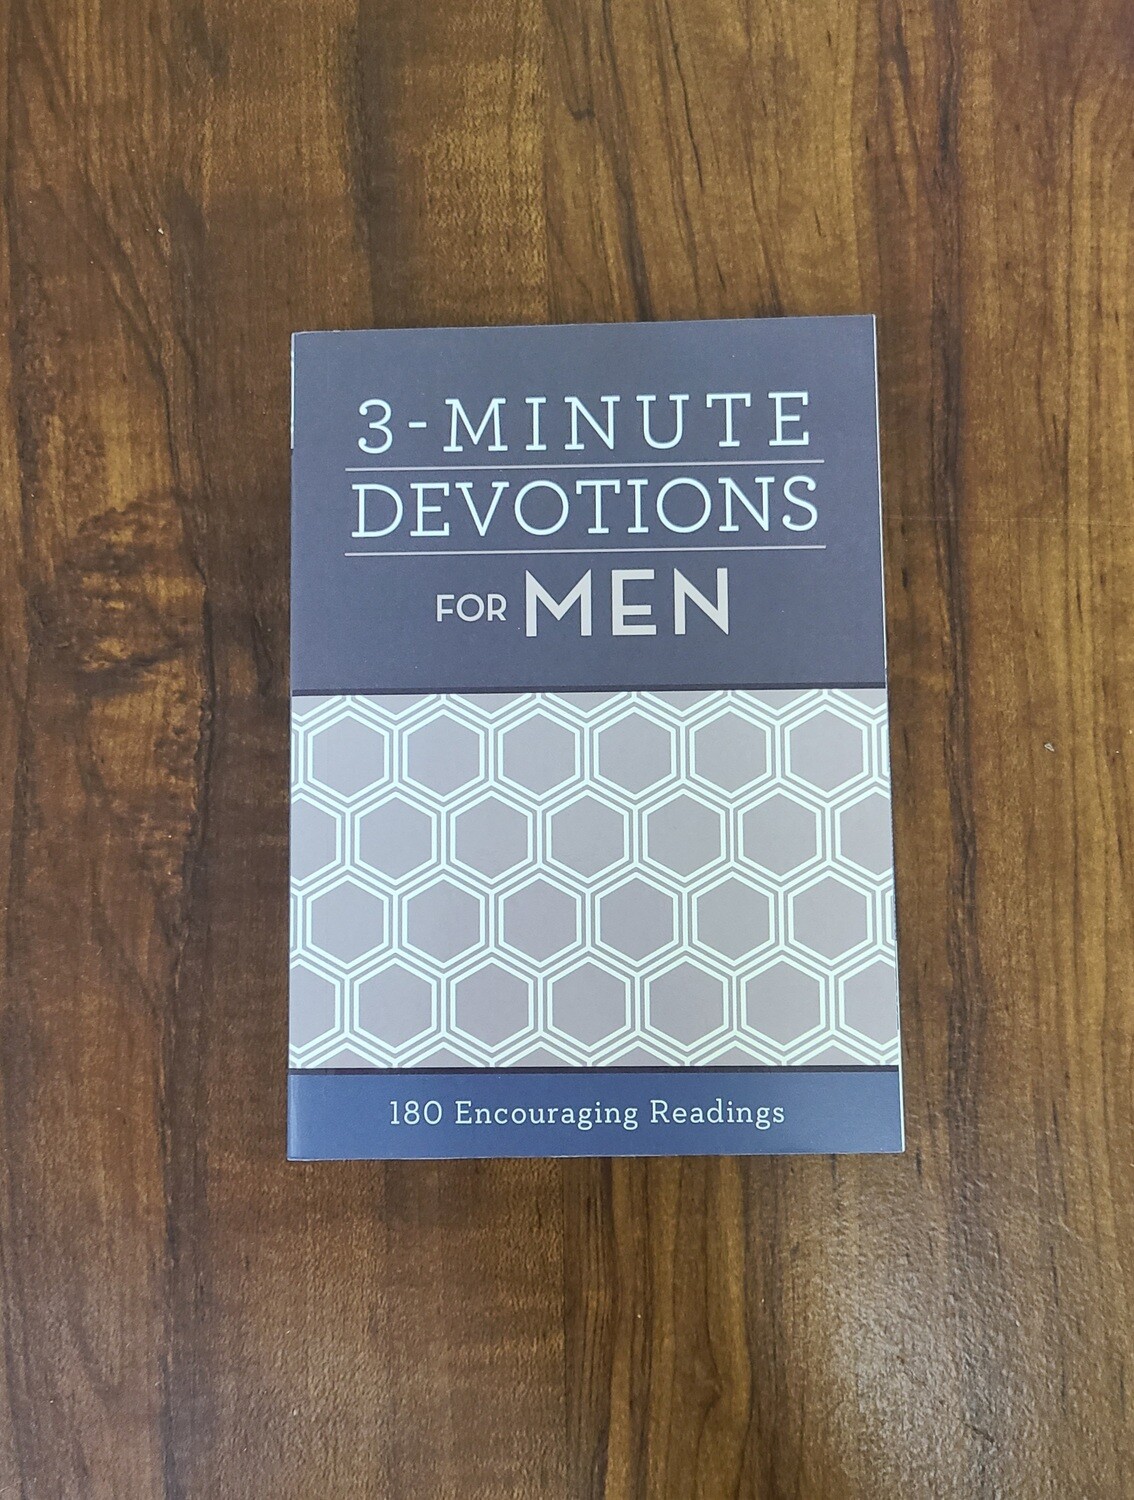 3-Minute Devotions for Men by Barbour Publishing Inc